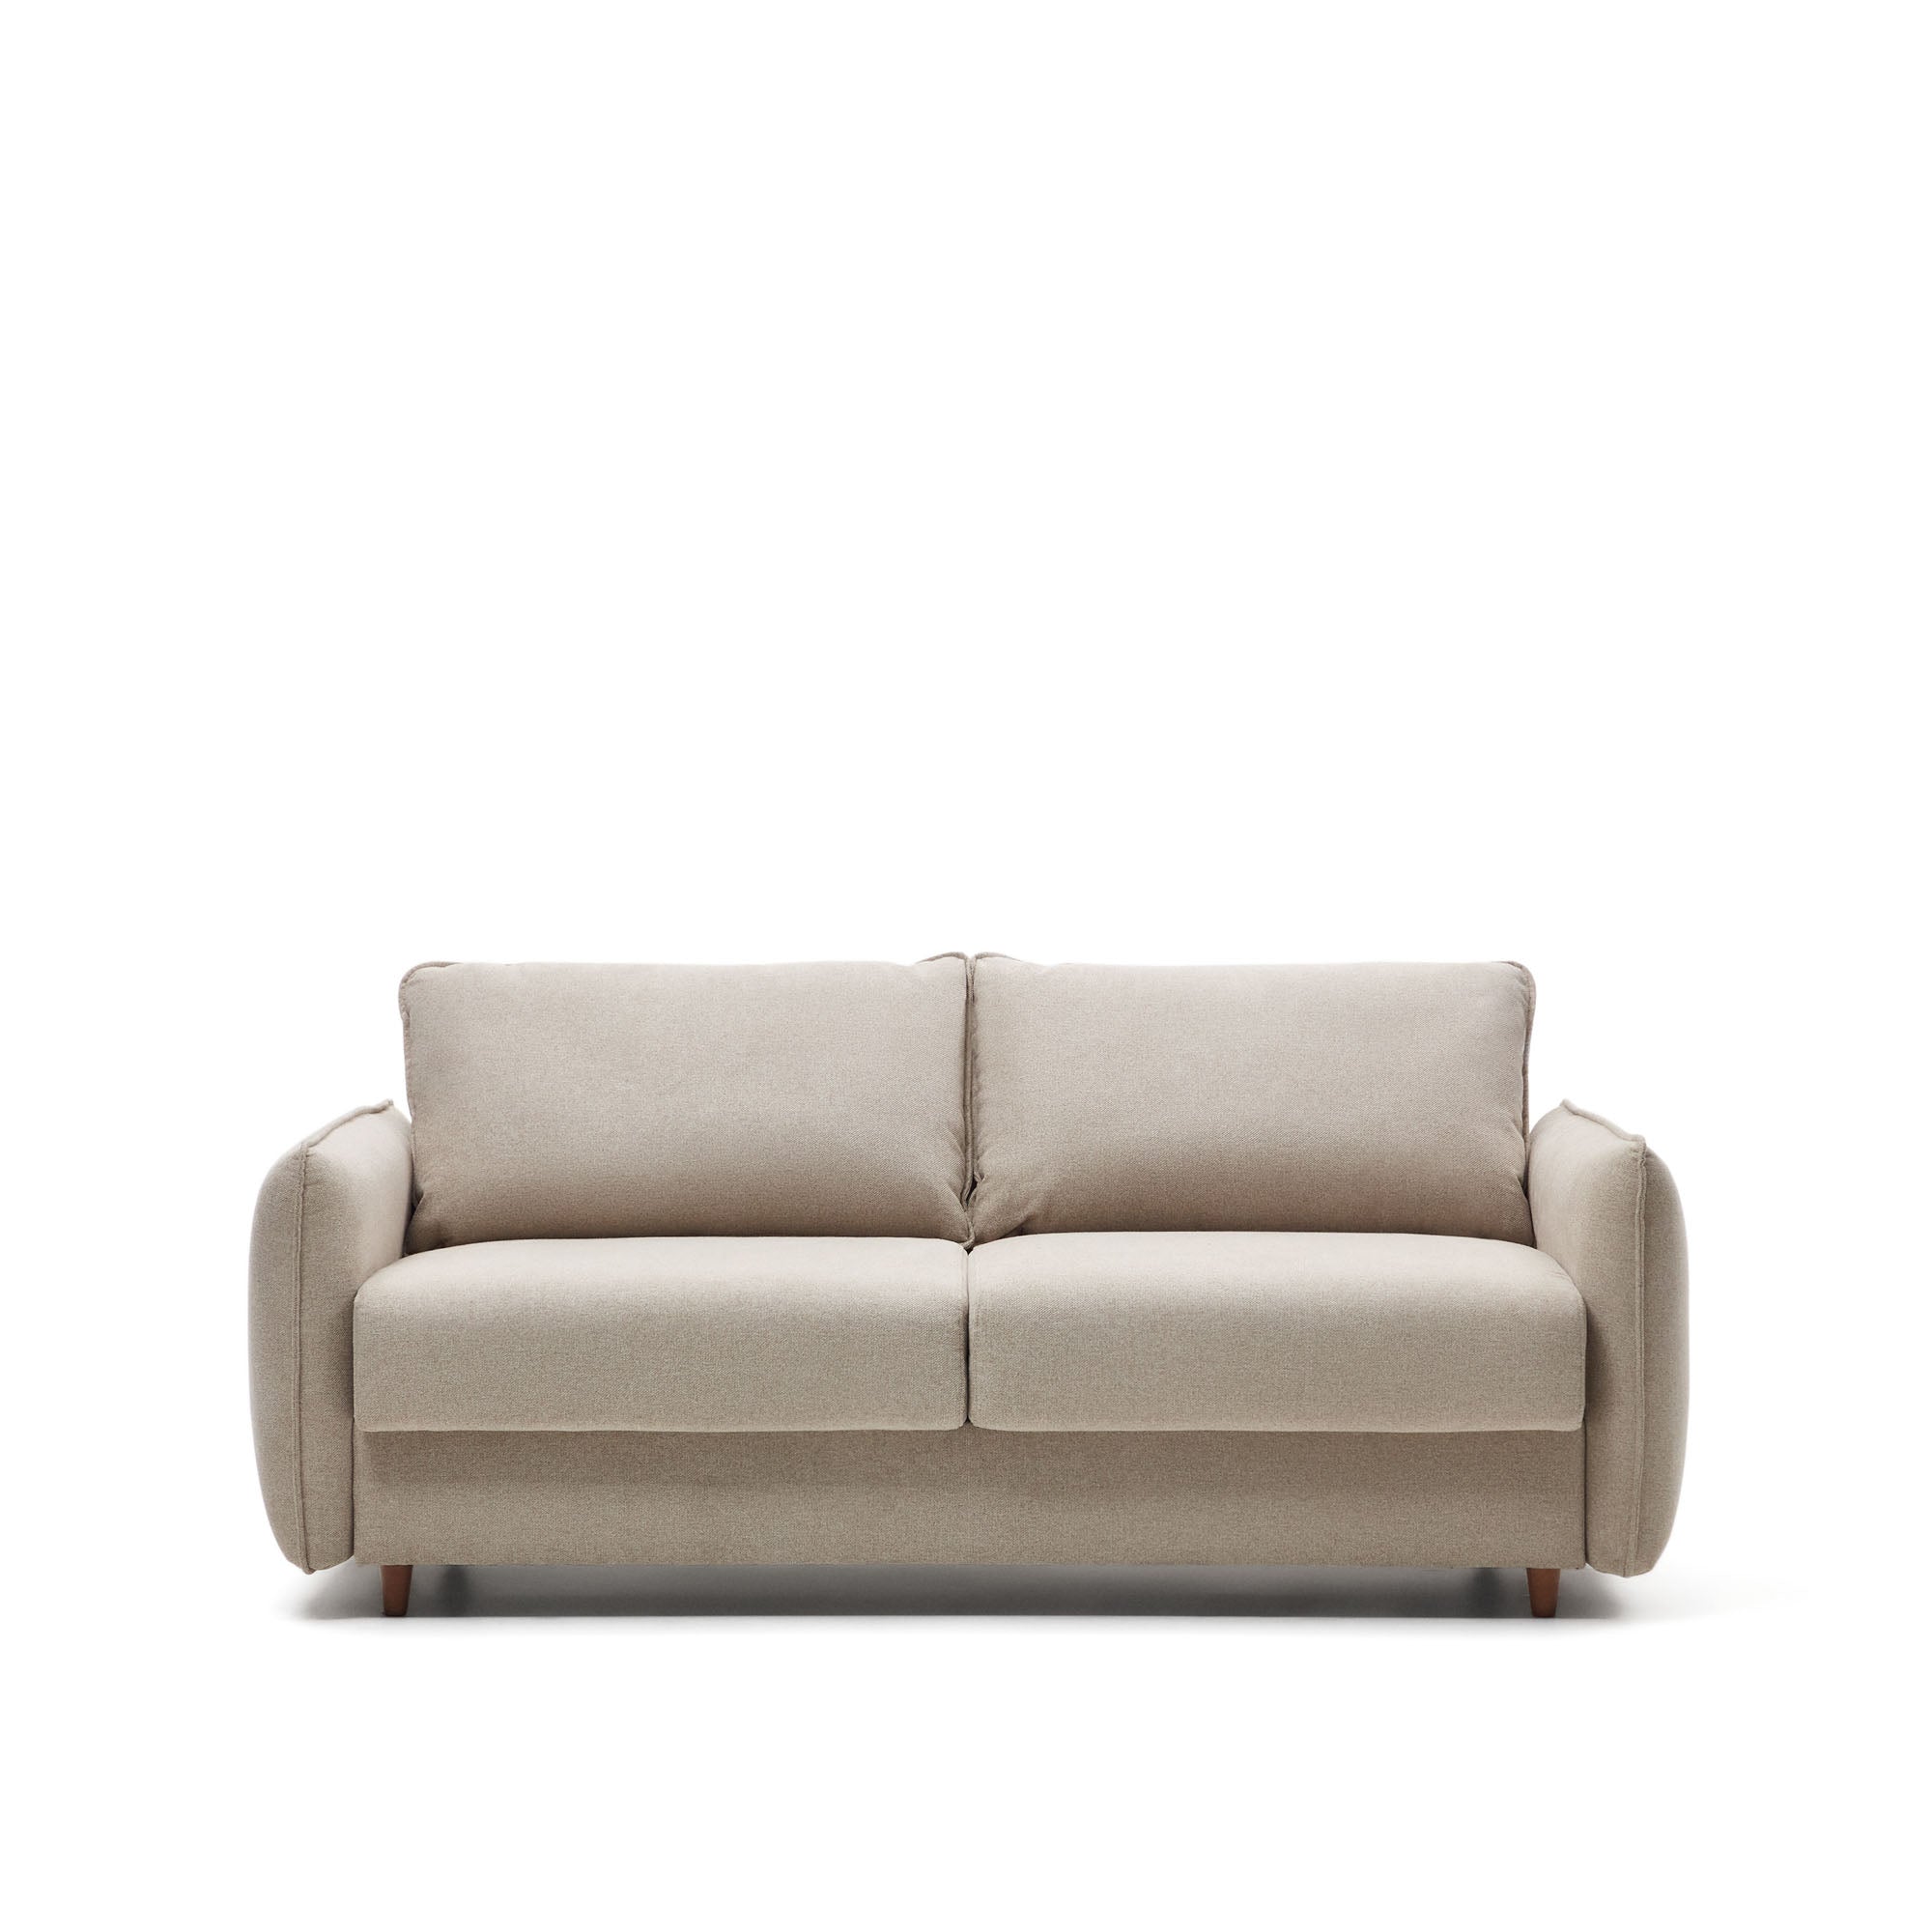 Carlota 2 seater sofa bed in beige chenille, 140 cm